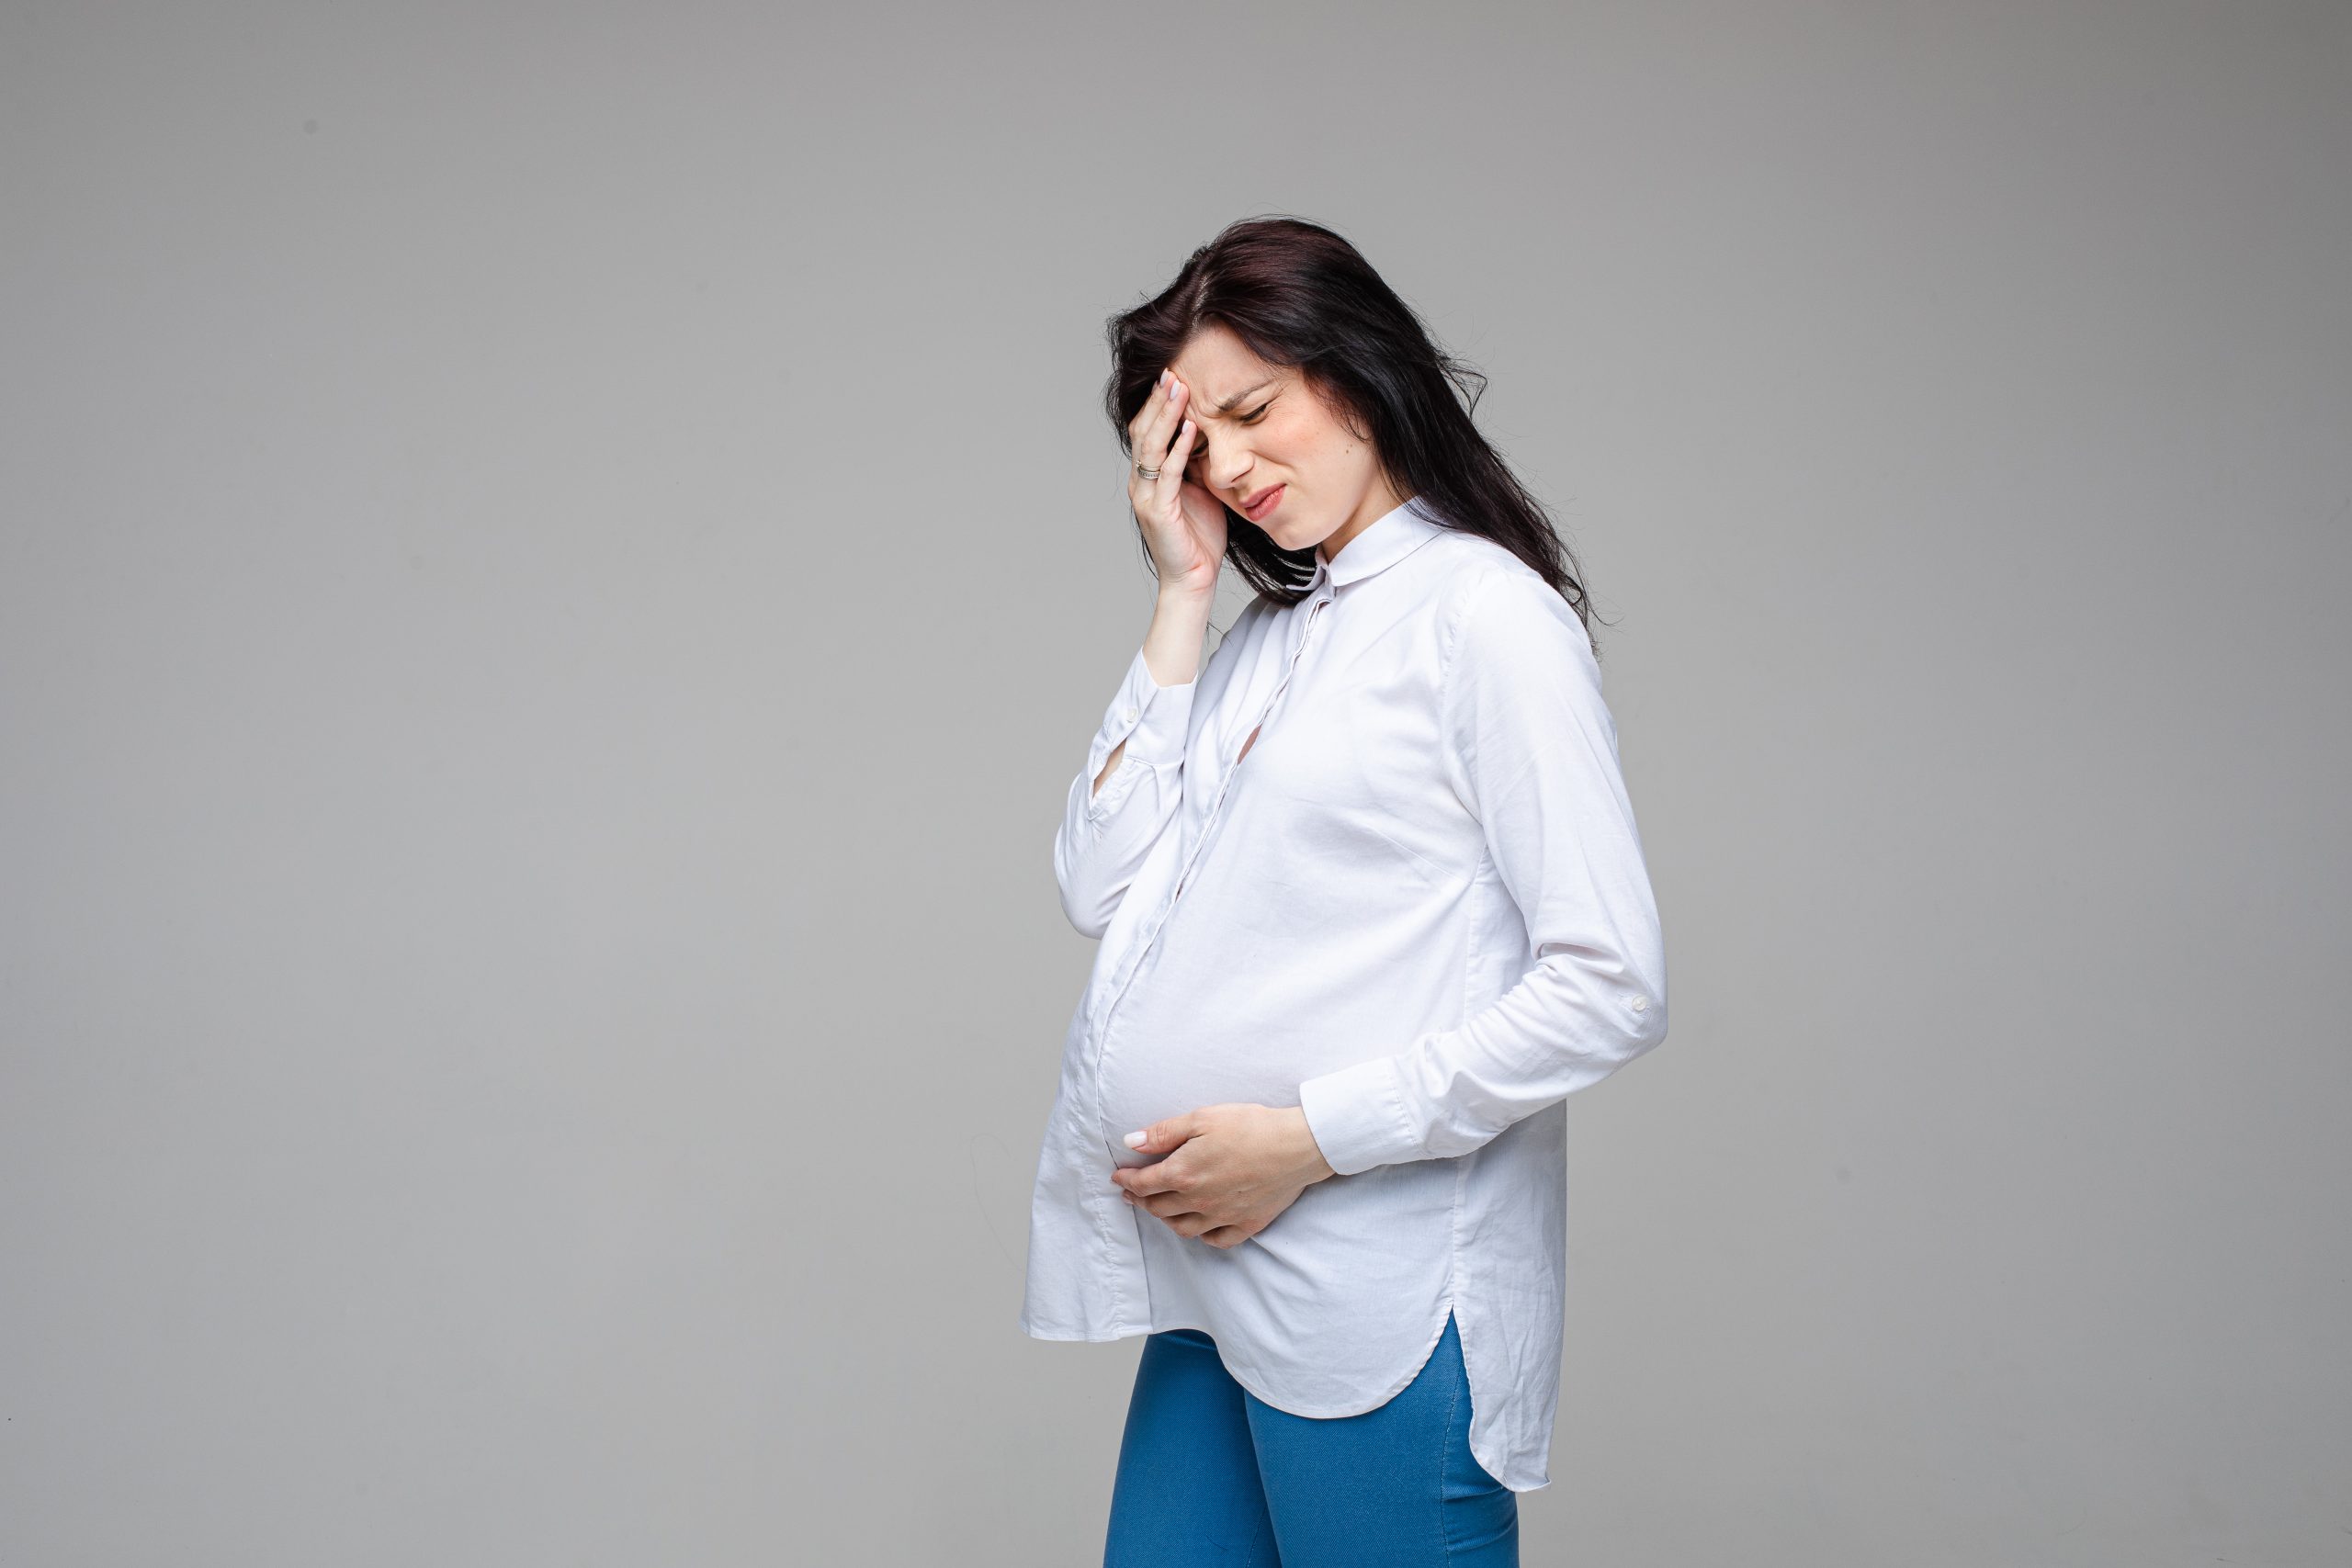 Quais os primeiros sintomas de gravidez antes do atraso menstrual?